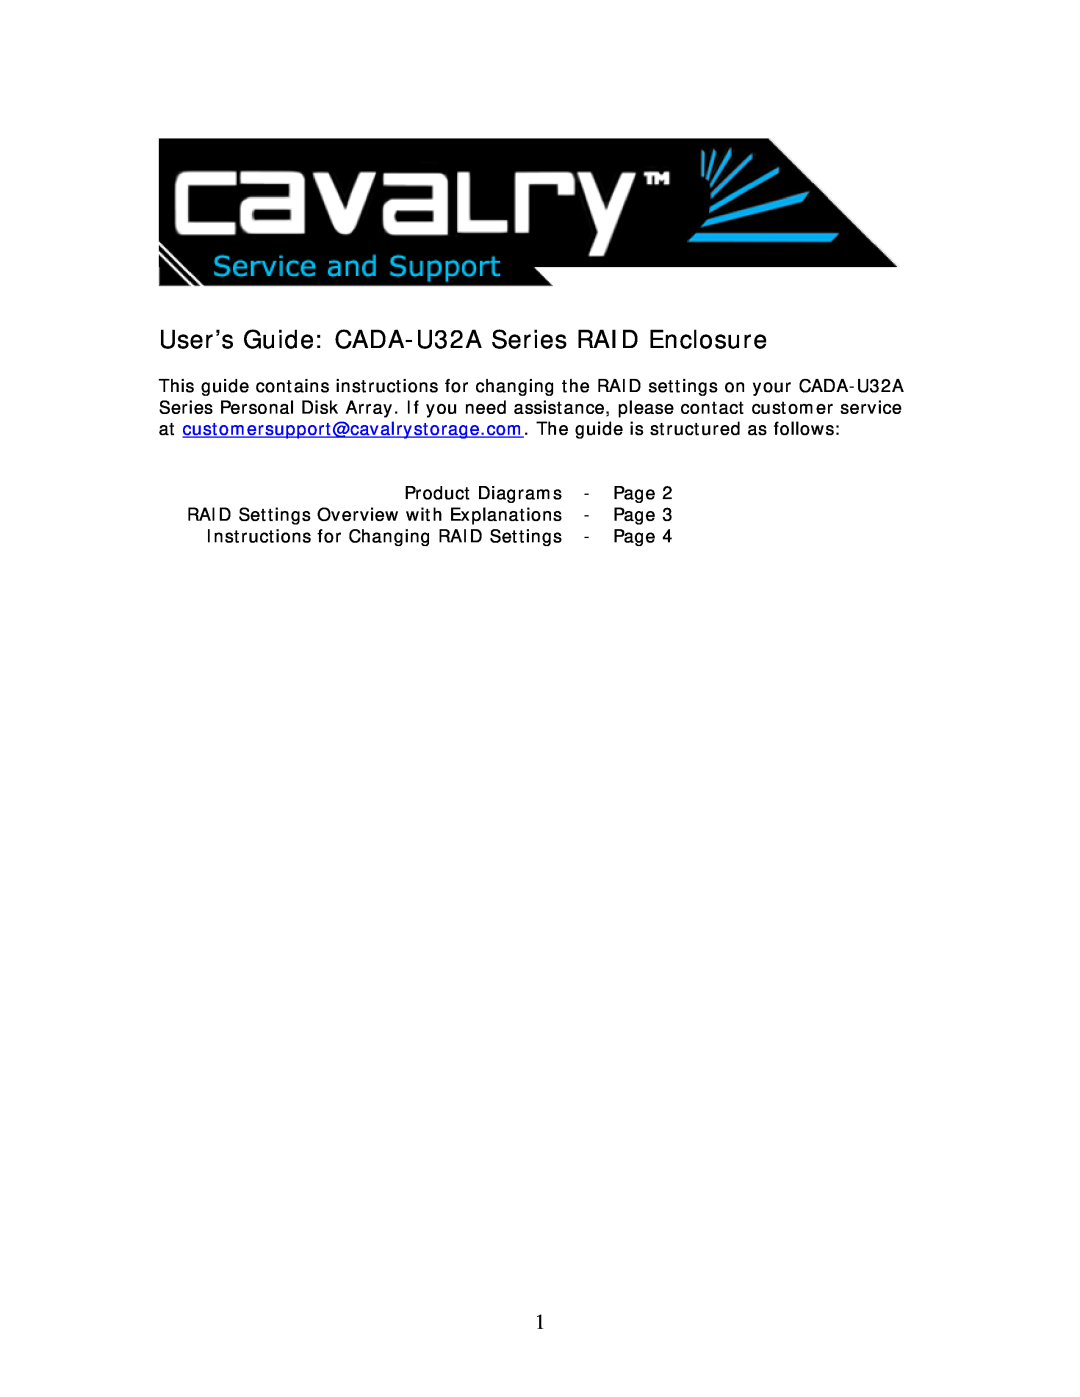 Cavalry Storage manual User’s Guide CADA-U32A Series RAID Enclosure, Product Diagrams, Page 